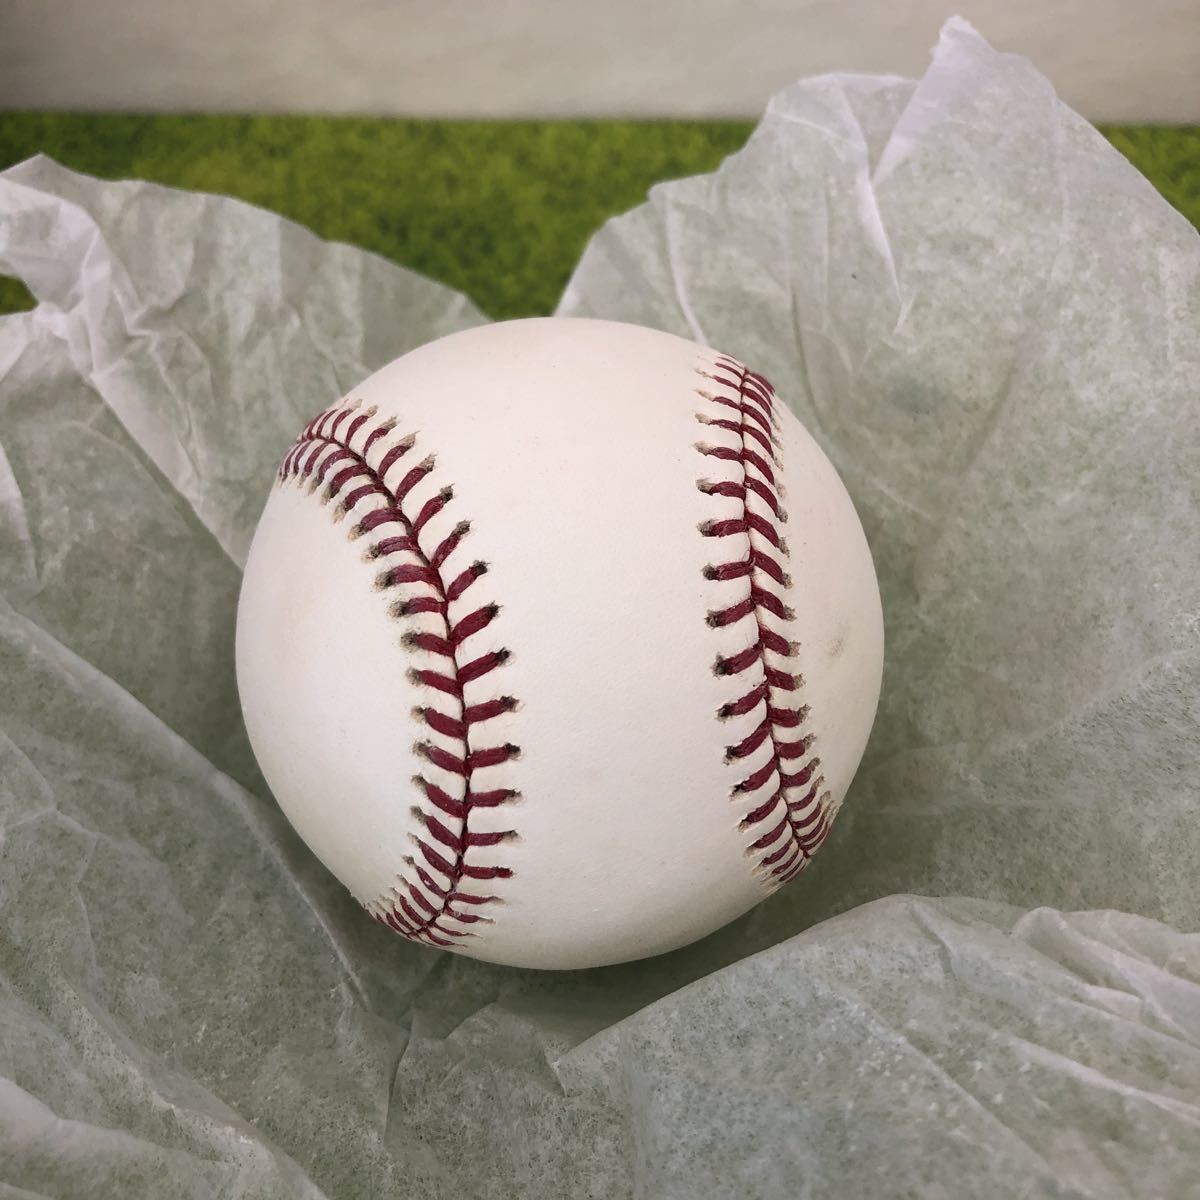 H-2169 品 MLB メジャーリーグ 公式球 試合球 硬式 ローリングス Rawlings ROMLB6 野球 ボール(硬式)｜売買されたオークション情報、yahooの商品情報をアーカイブ公開  - オークファン（aucfan.com）